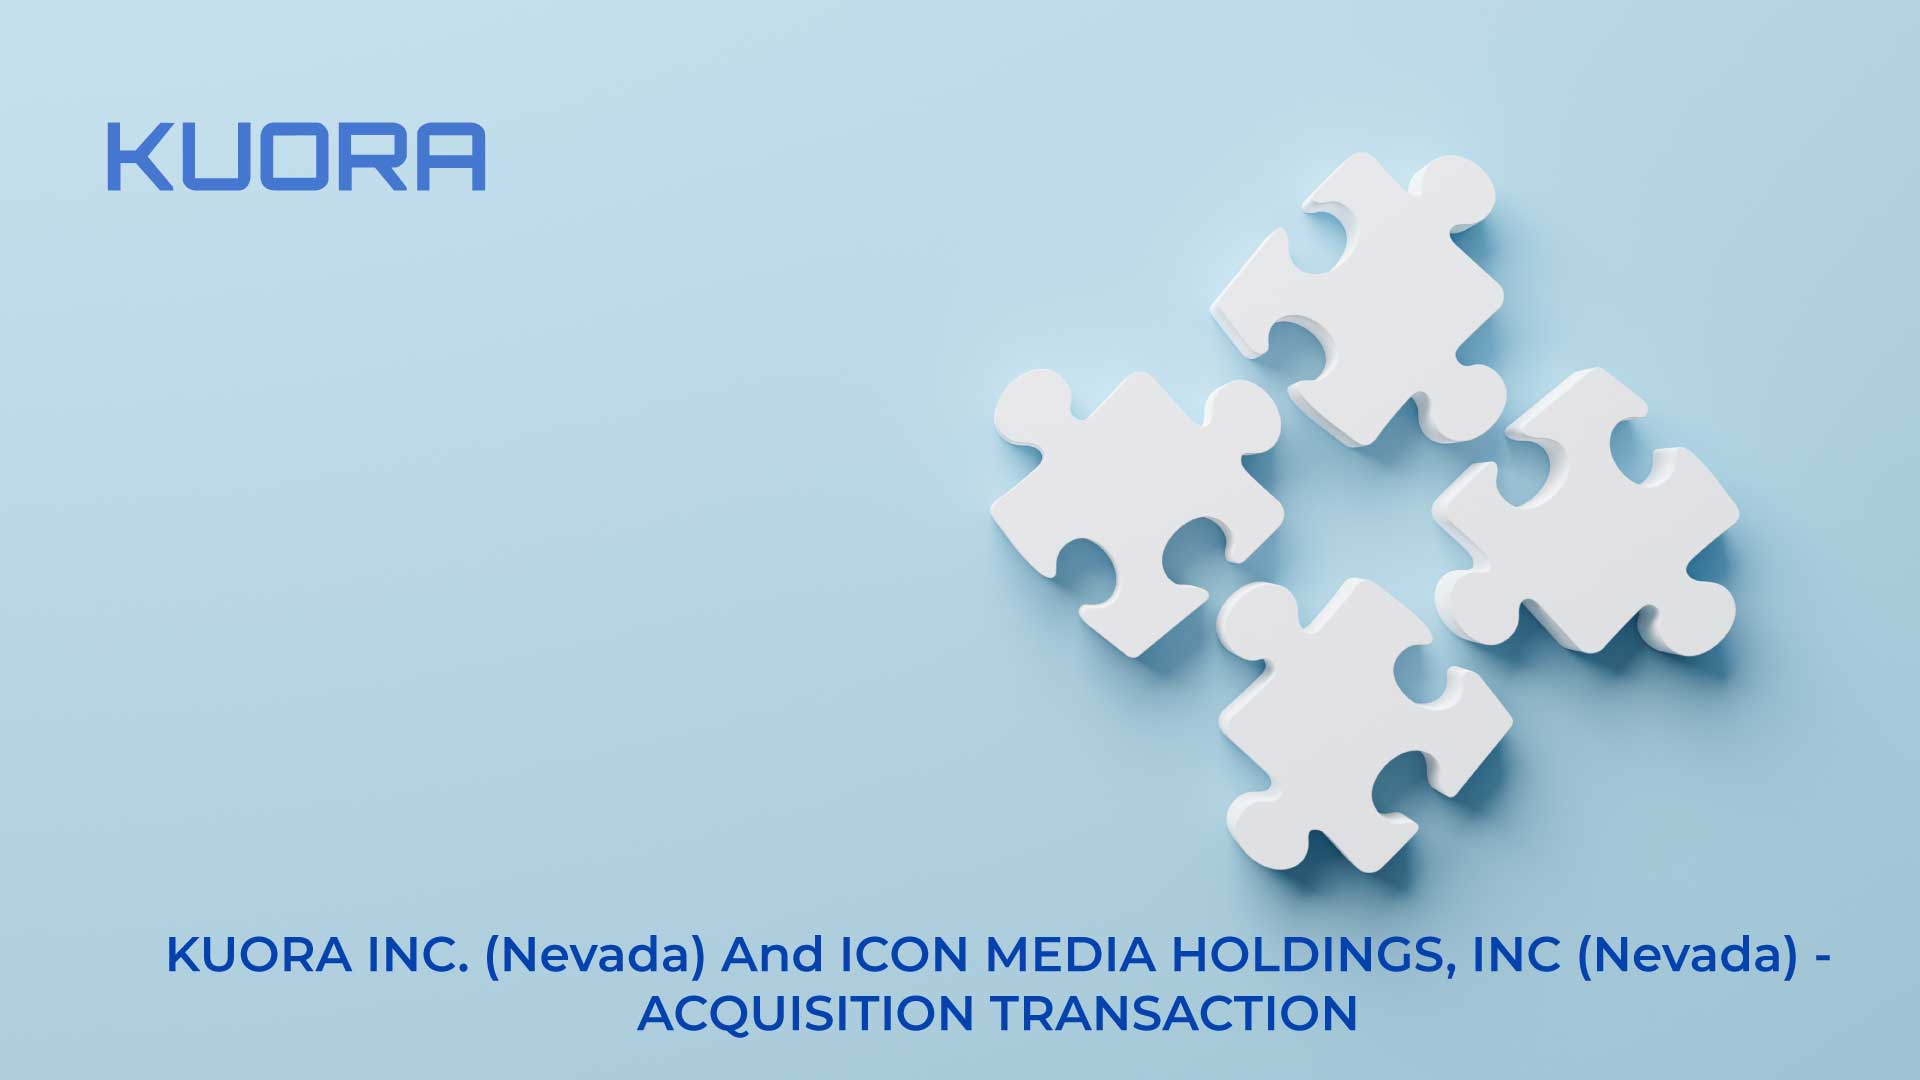 KUORA INC. (Nevada) And ICON MEDIA HOLDINGS, INC (Nevada) - ACQUISITION TRANSACTION